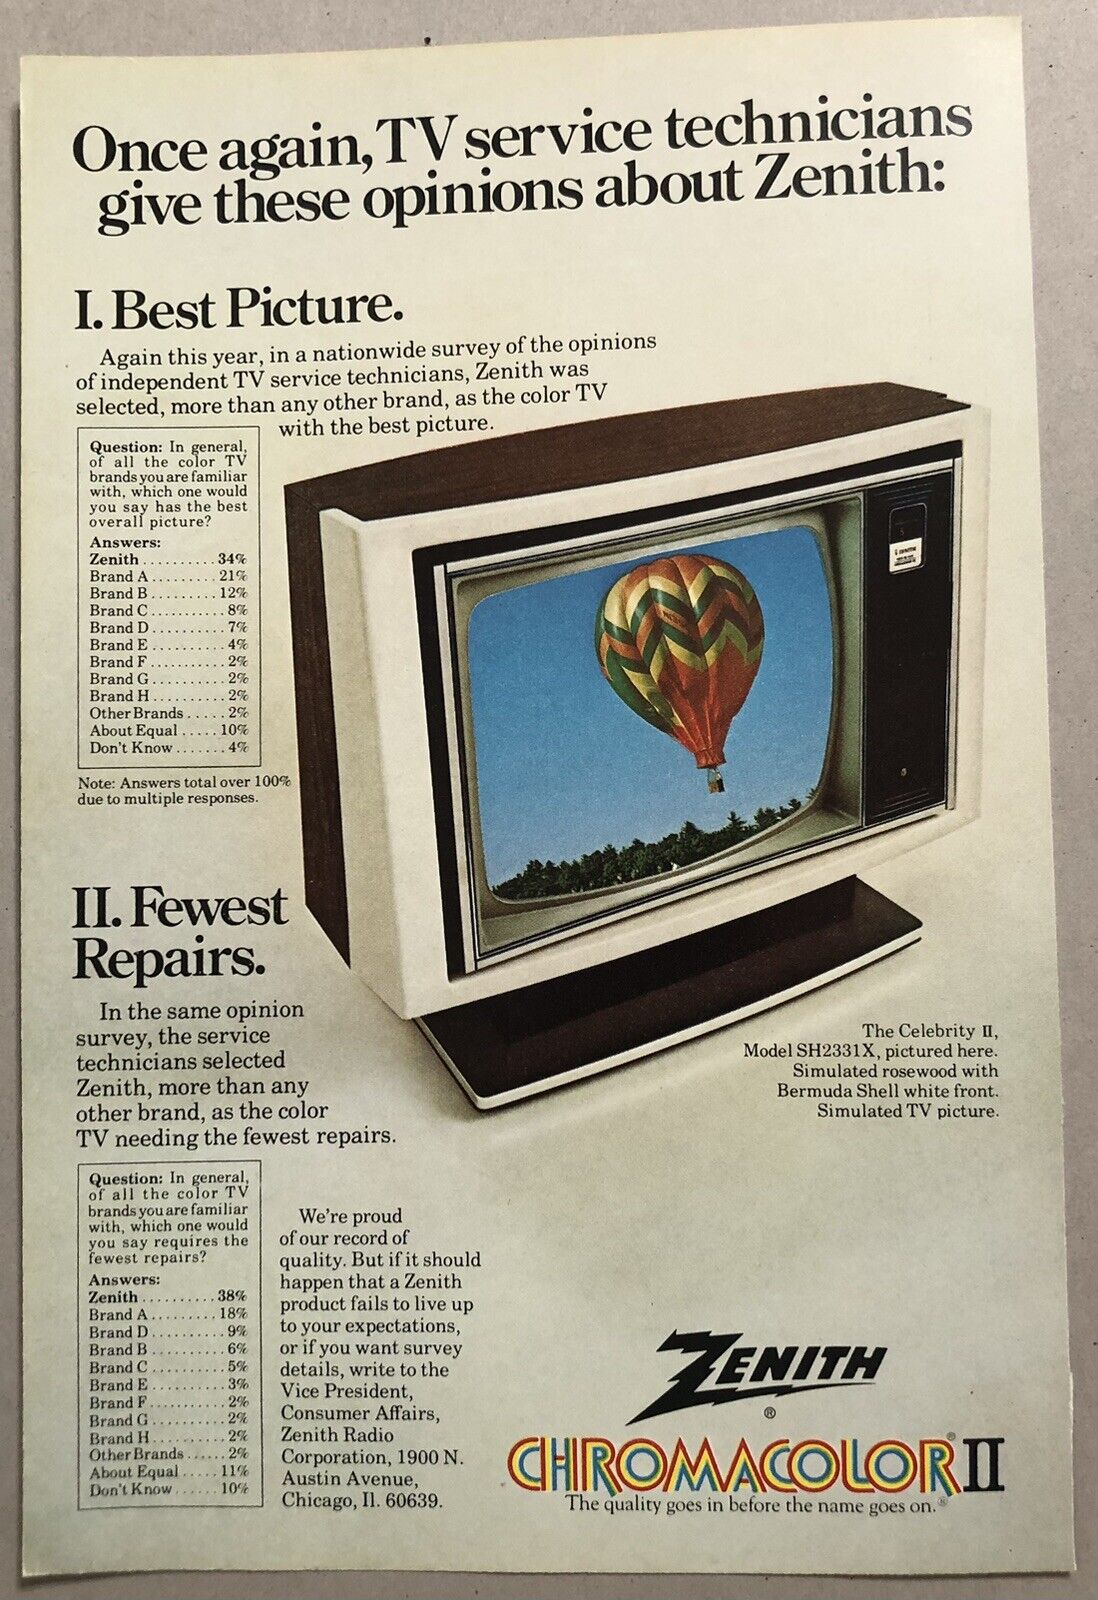 Vintage 1977 Original Print Advertisement Full Page - Zenith Chromacolor II TV